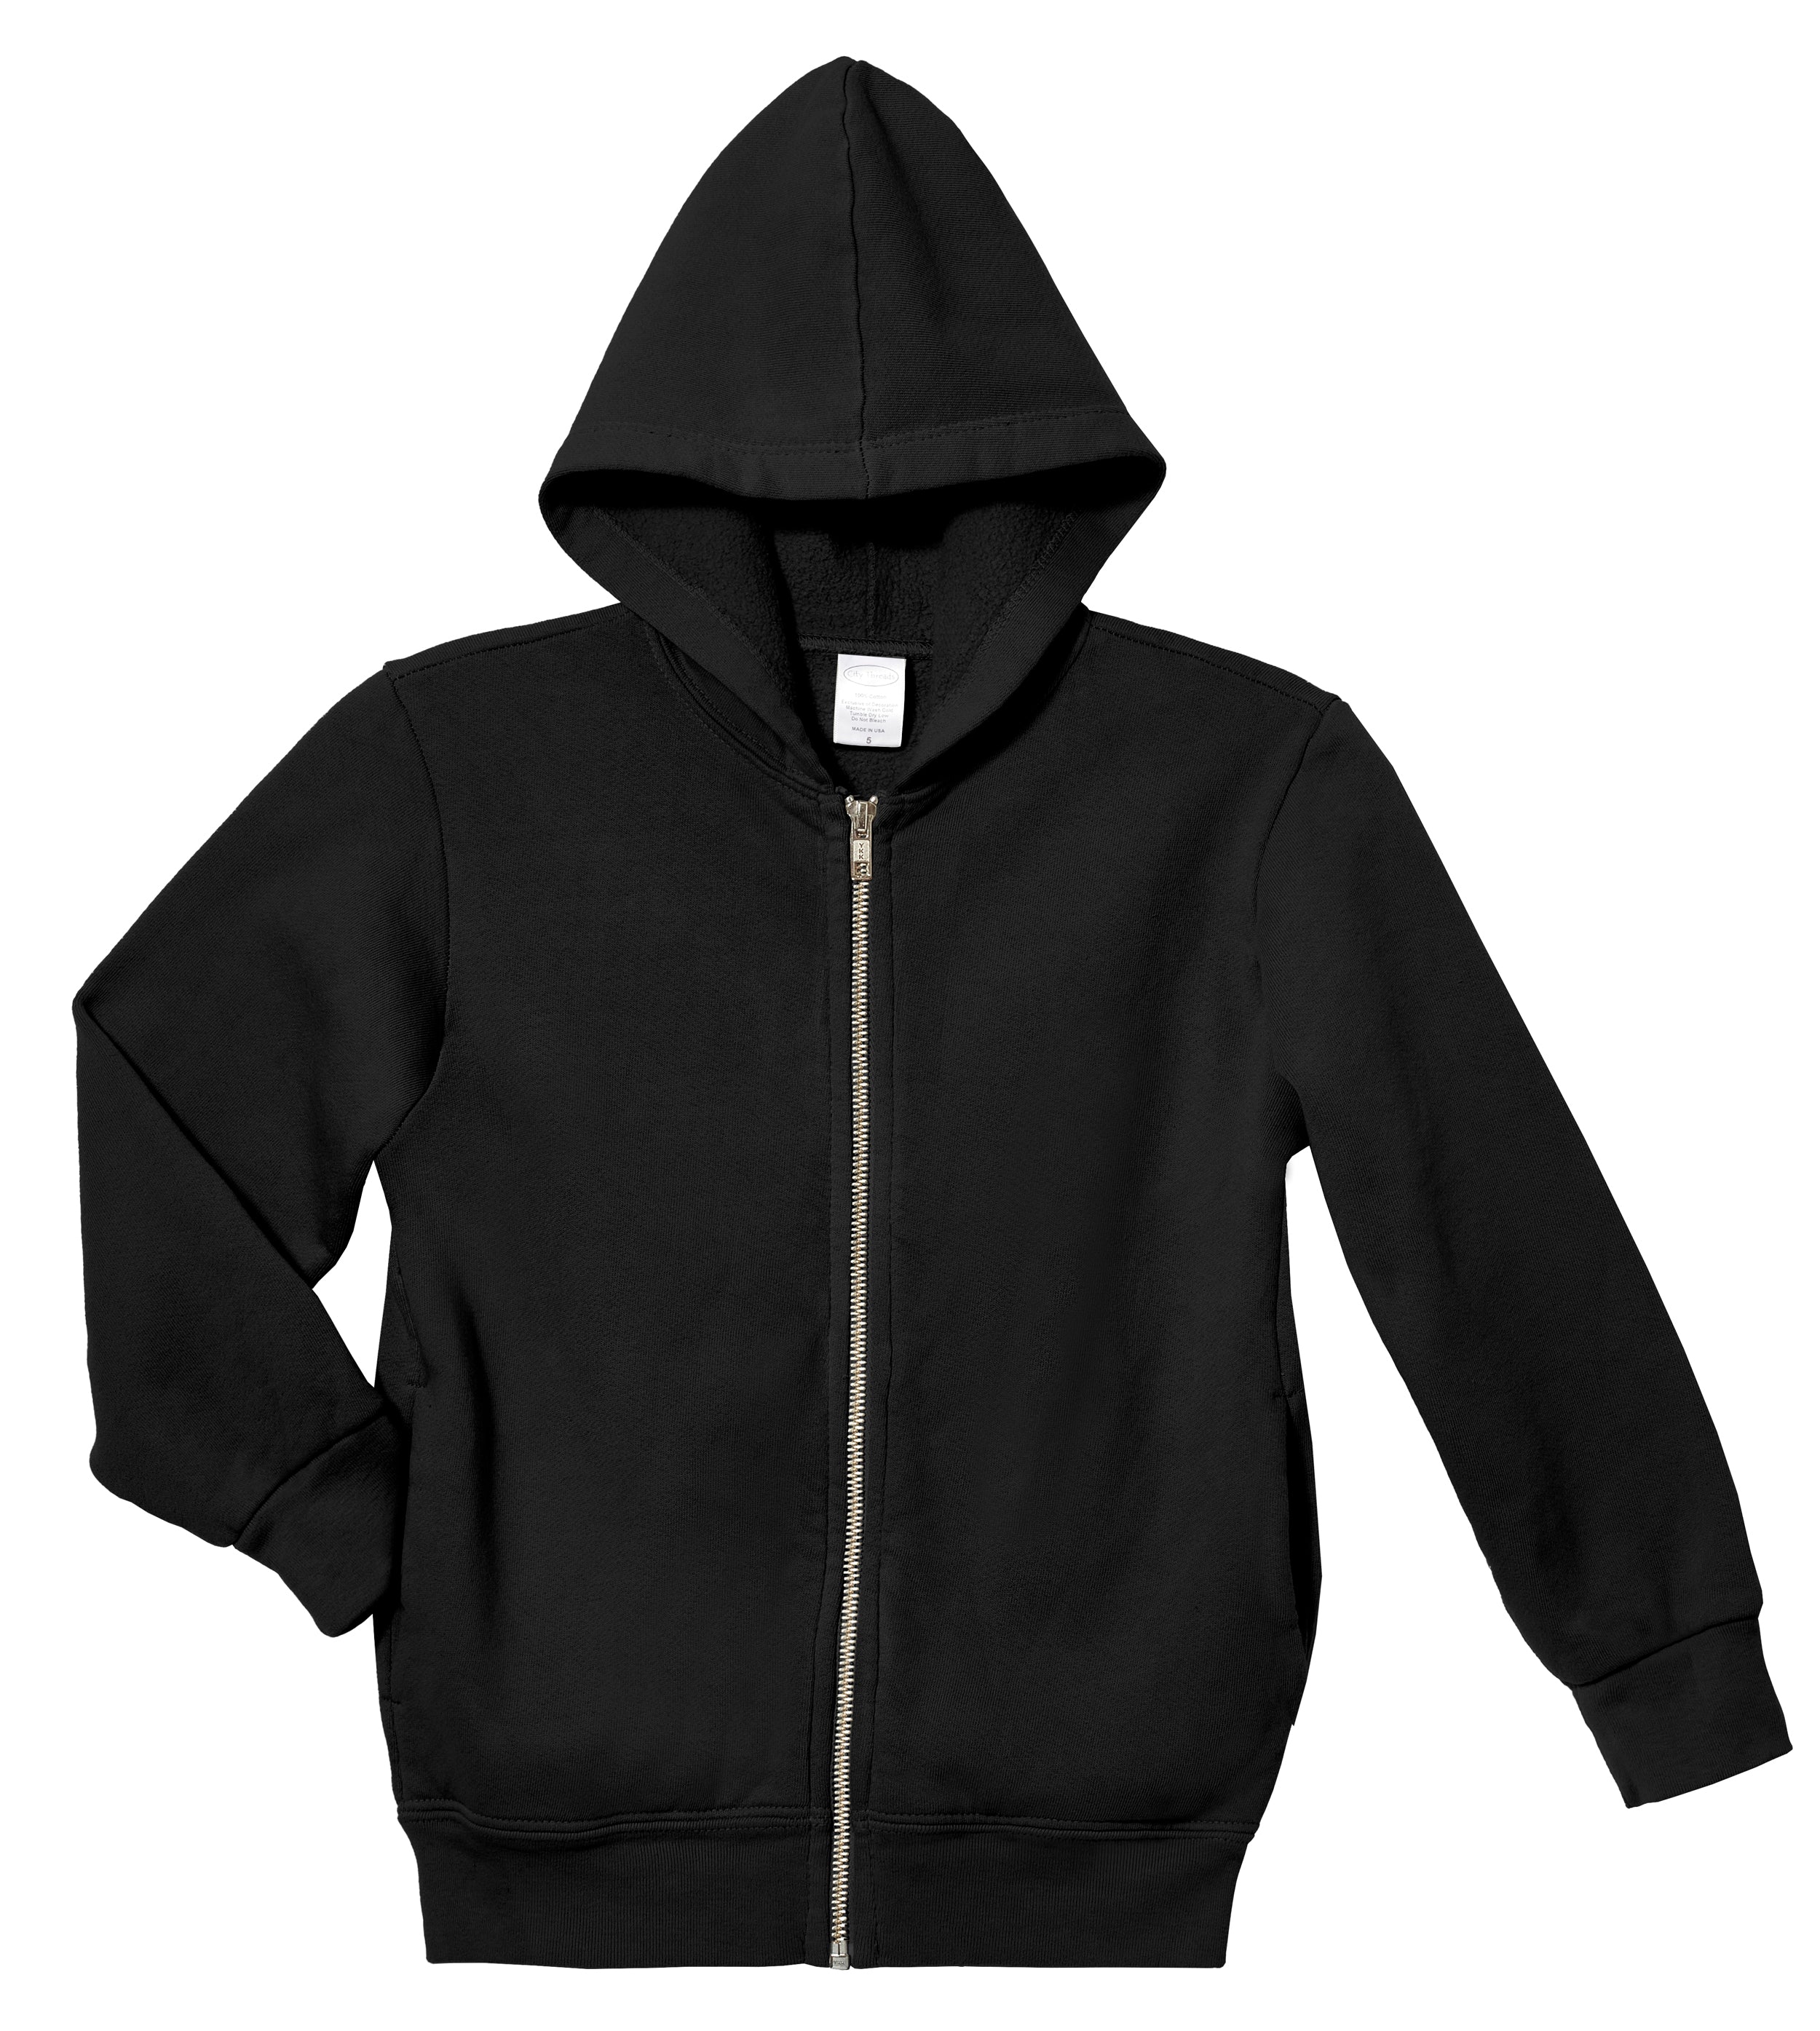 Just Sweatshirts Hooded Full Front Zipper Black 100% Cotton